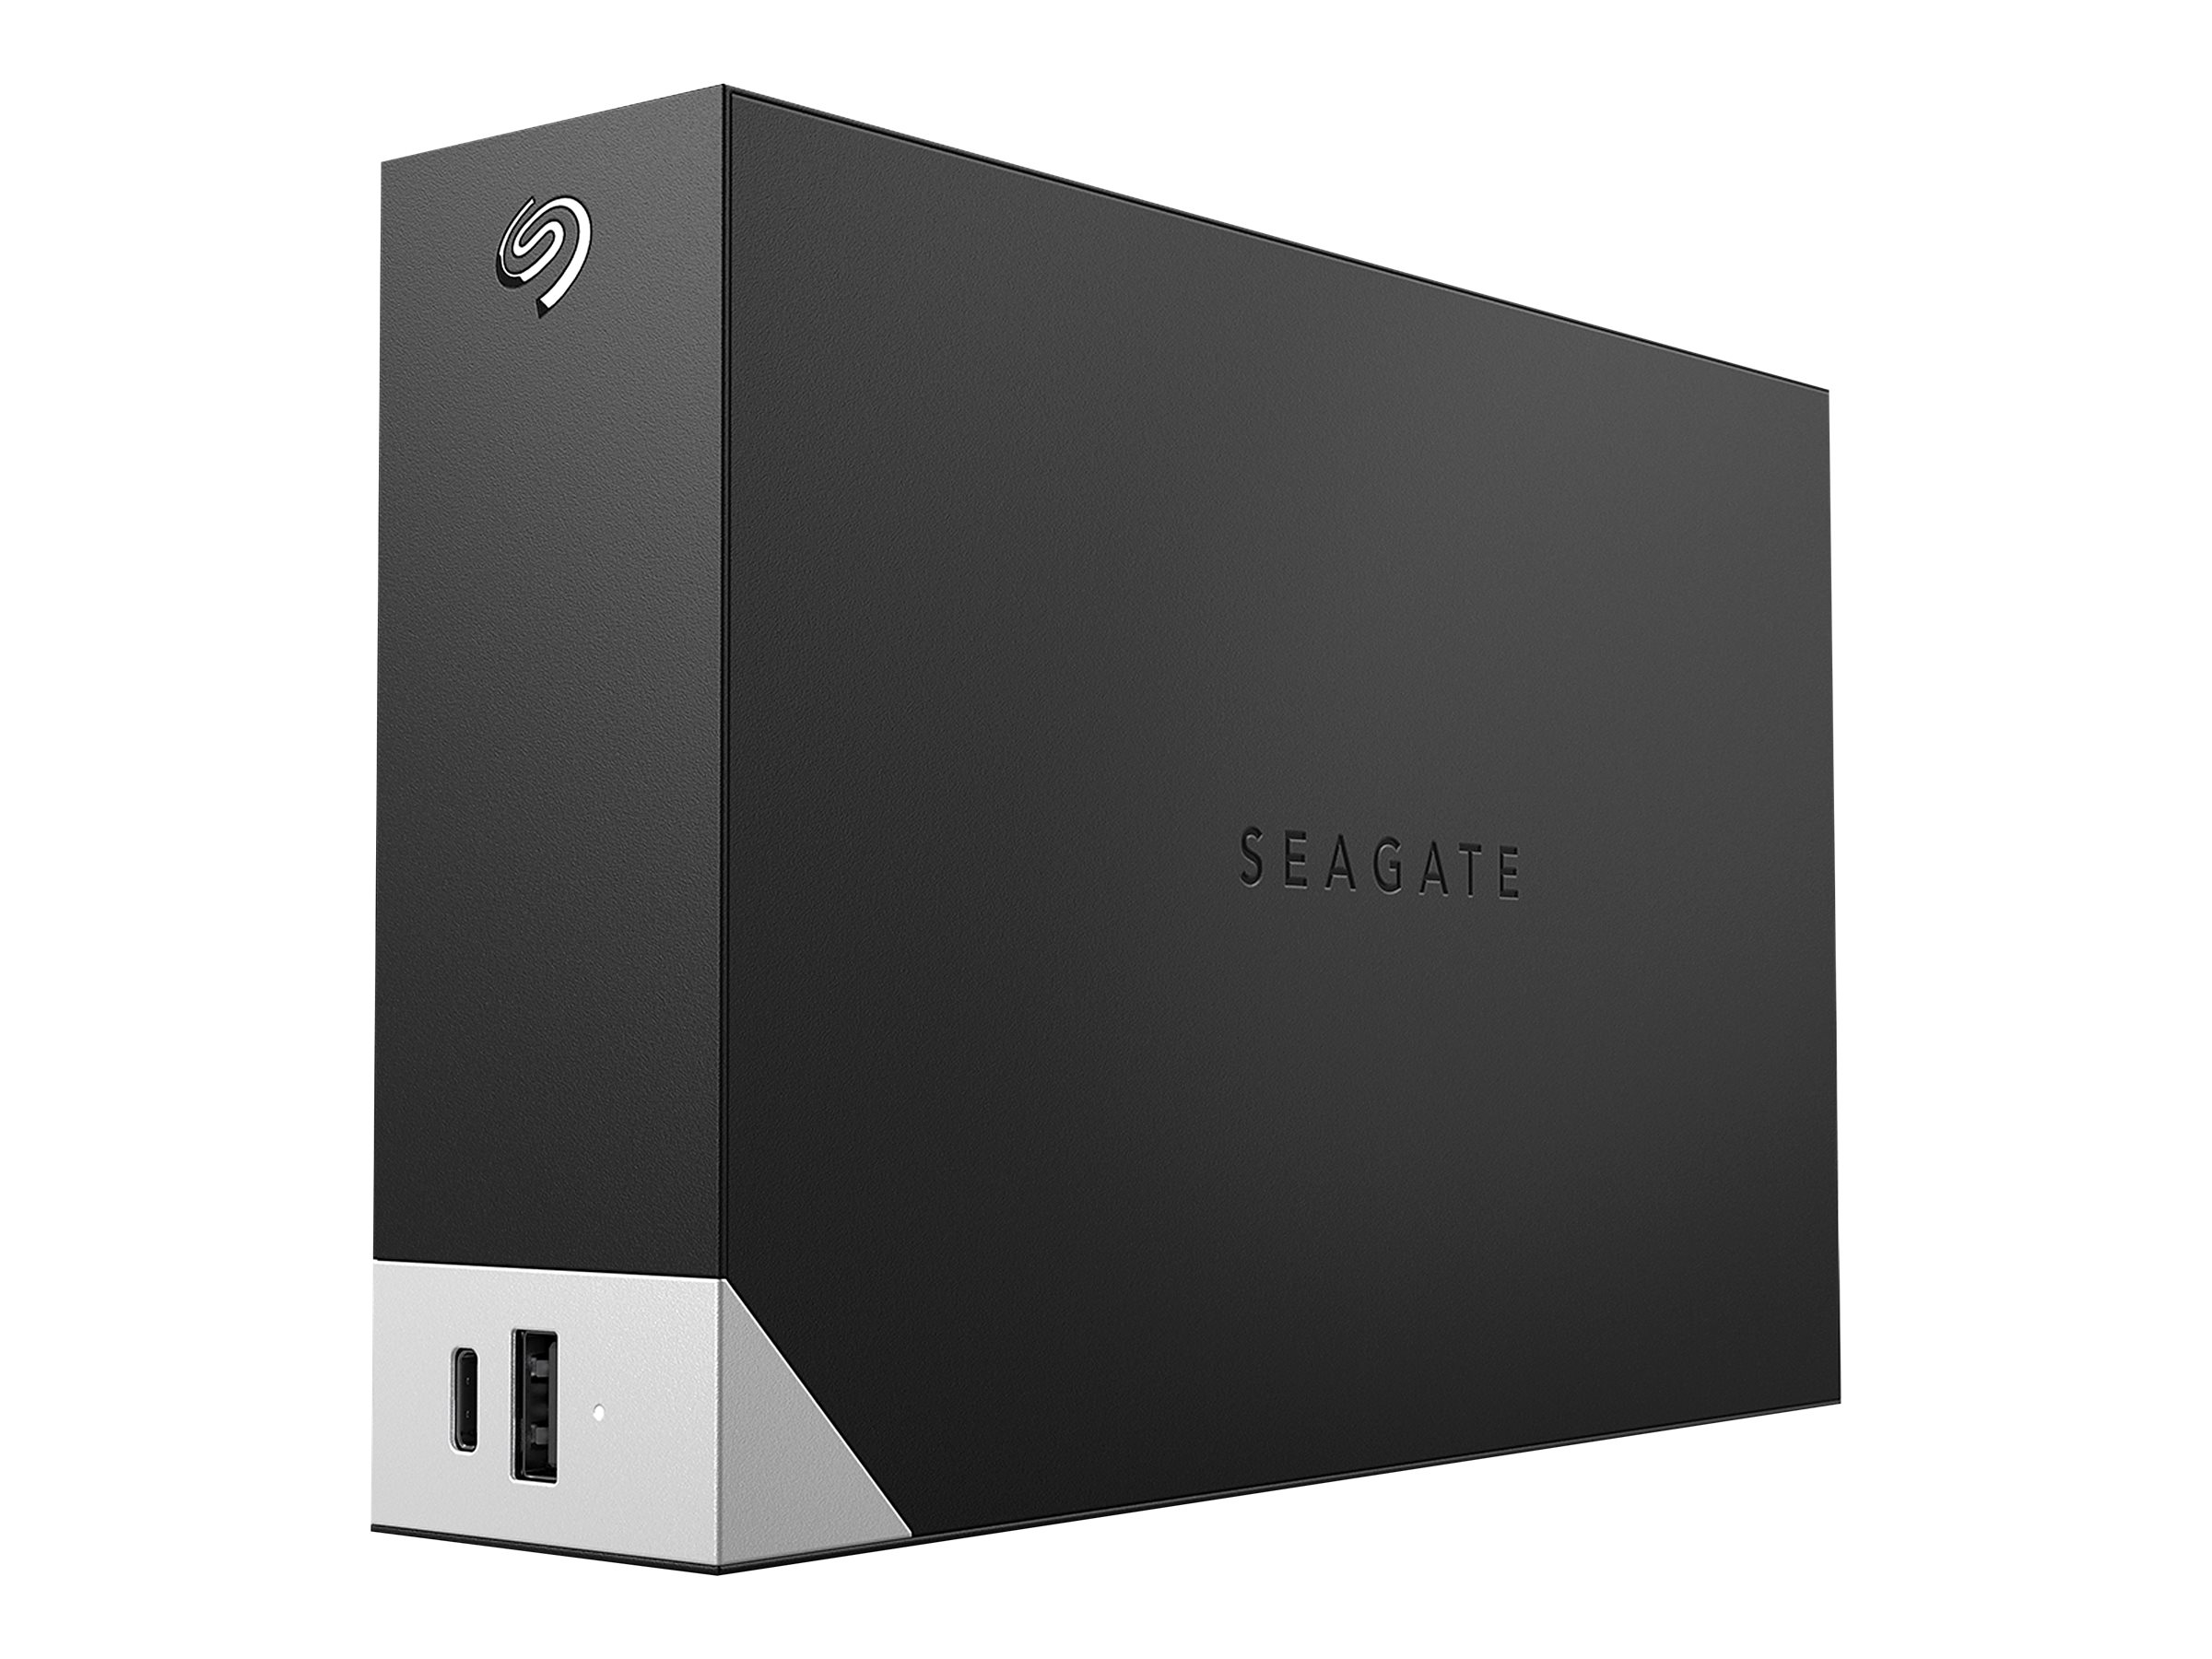 Seagate One Touch with hub STLC18000402 - Festplatte - 18 TB - extern (Stationär) - USB 3.0 - Schwarz